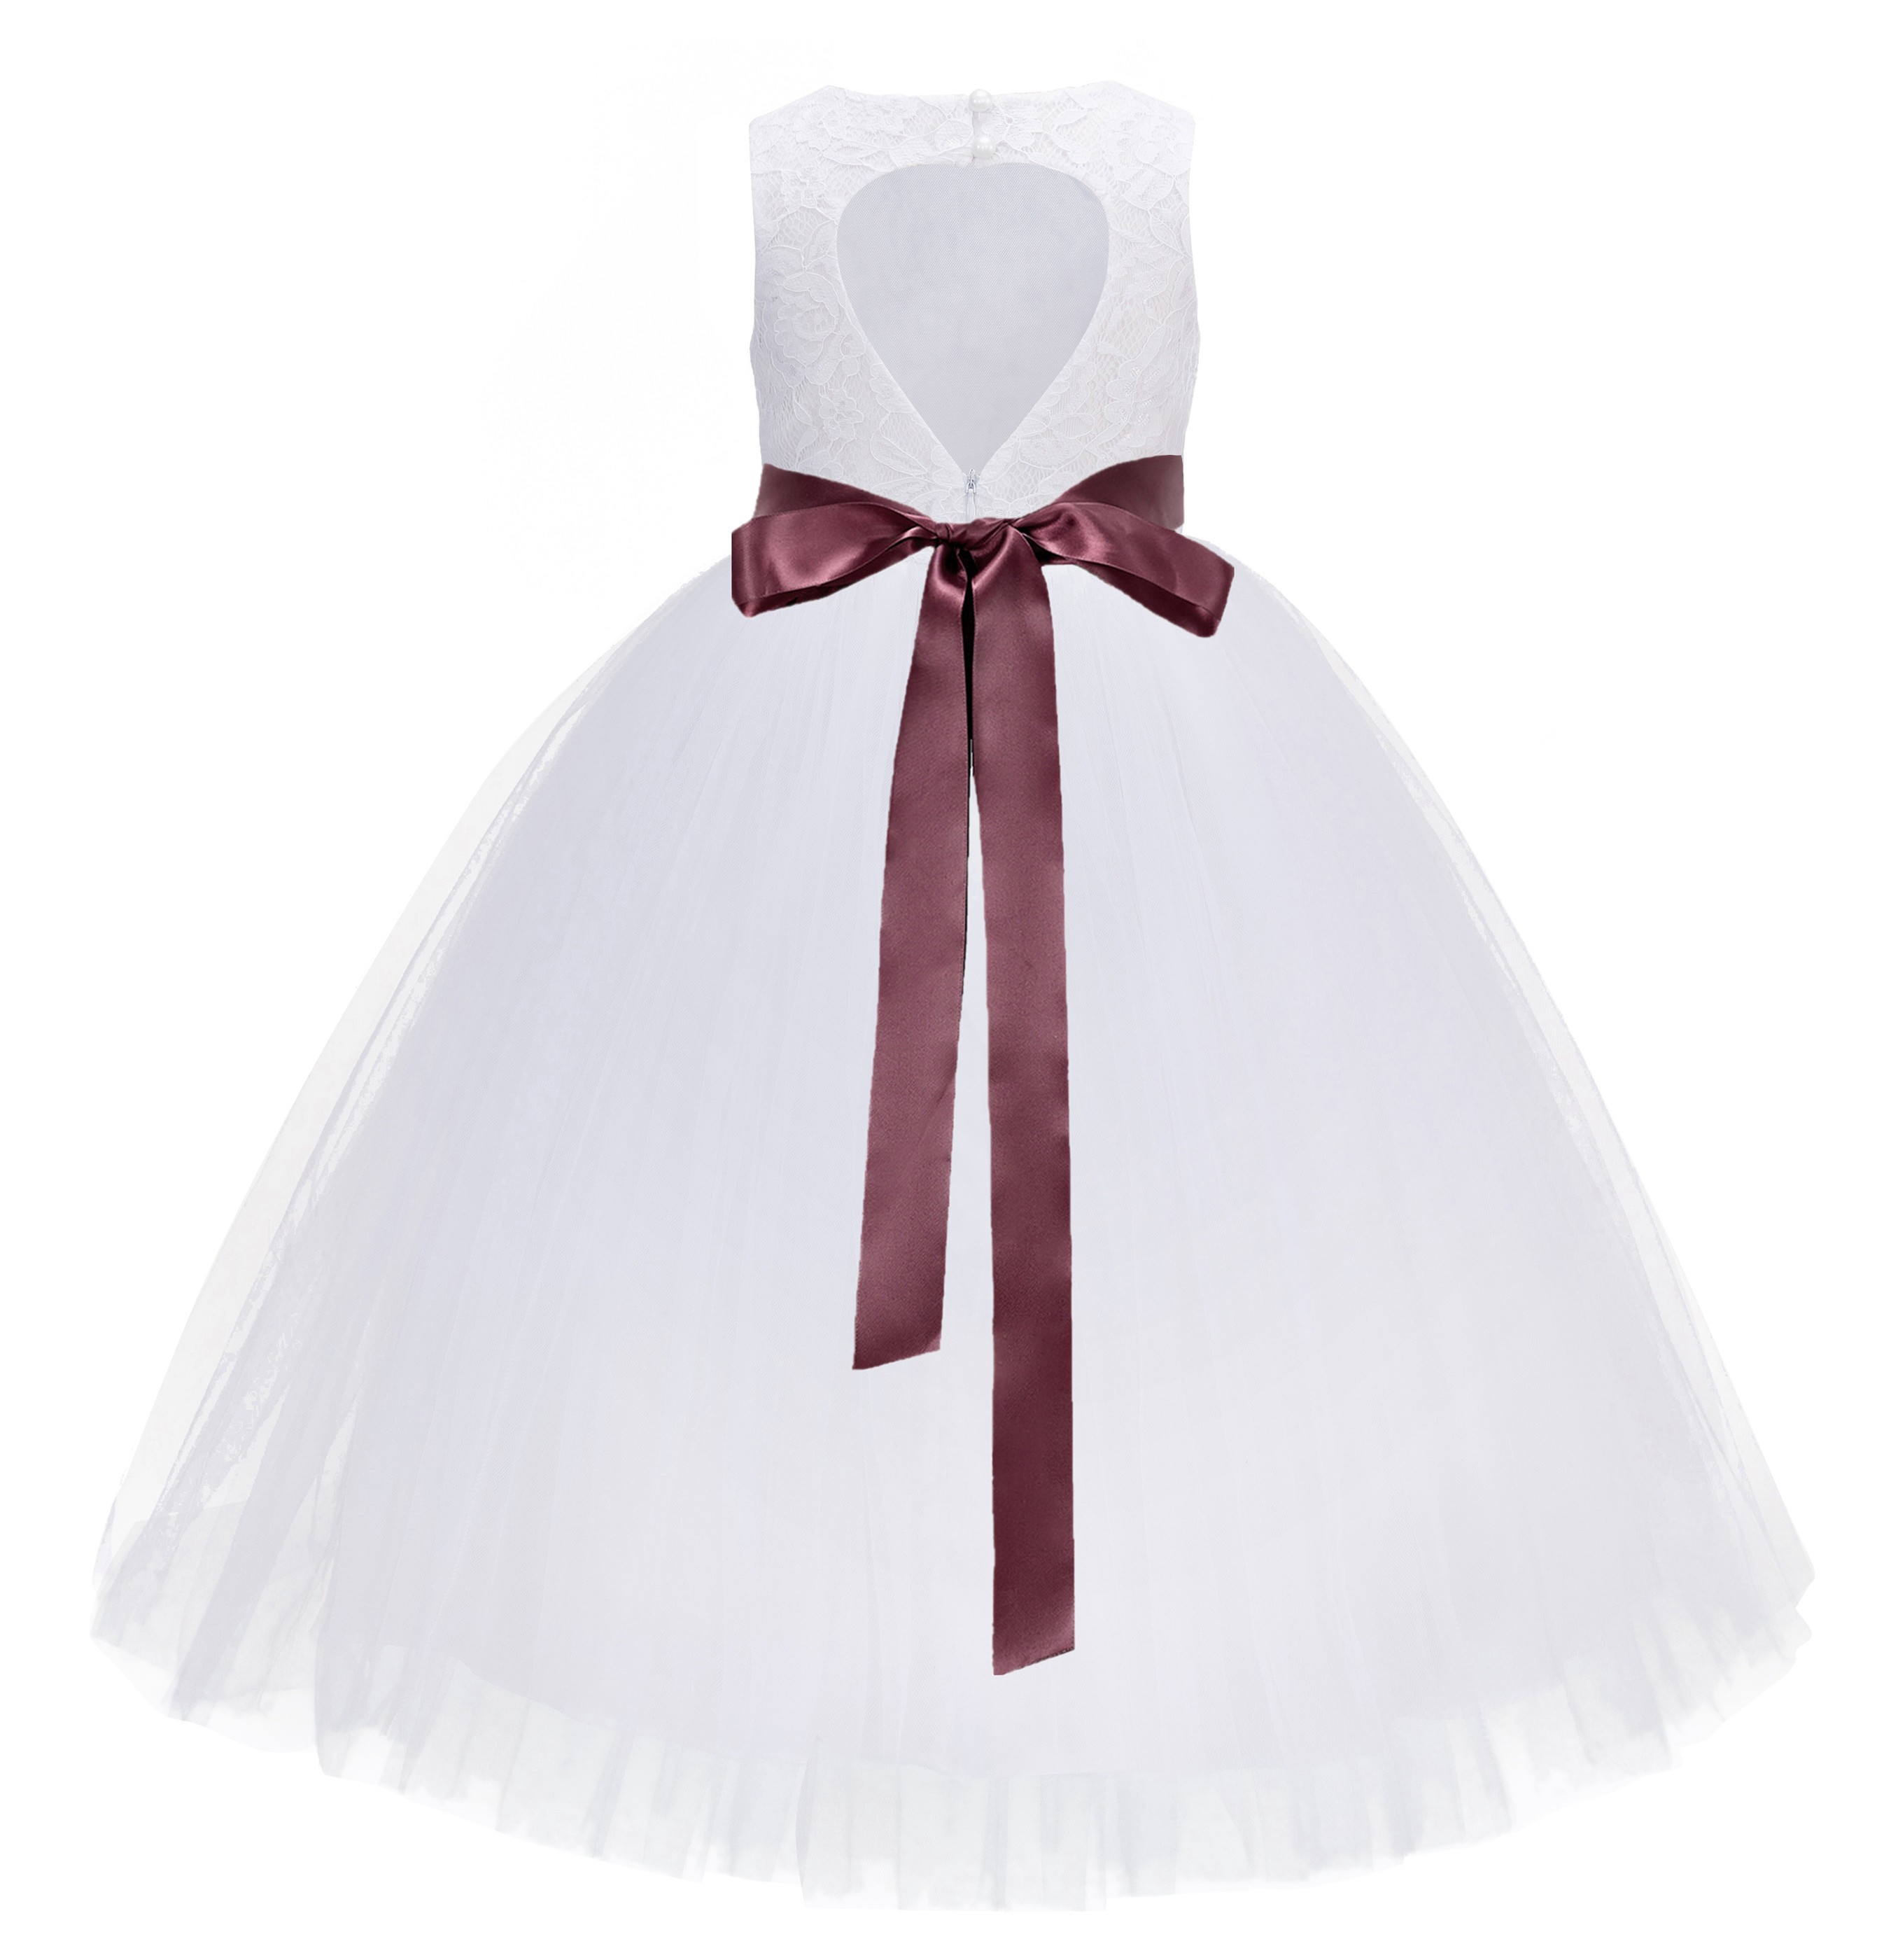 R3 White / Burgundy Floral Lace Heart Cutout Flower Girl Dress 172R3